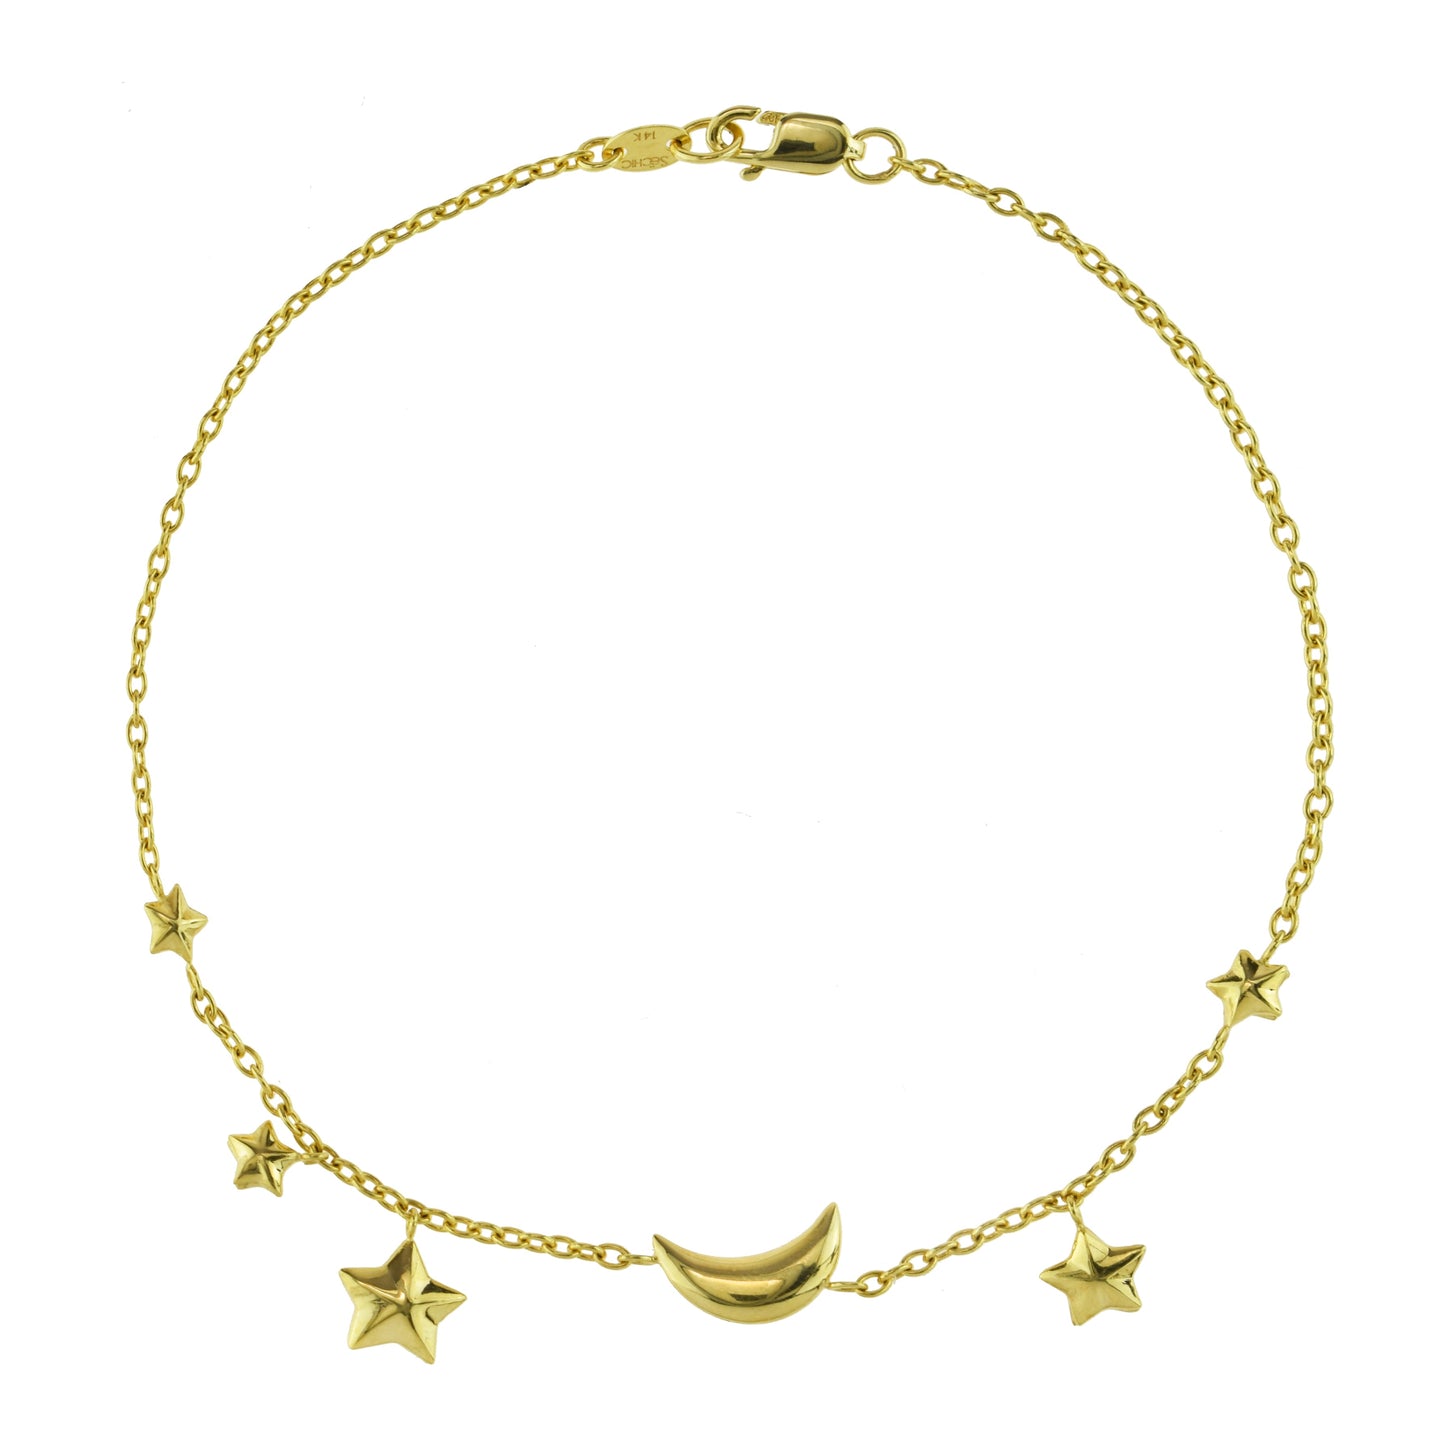 Séchic 14k Moon & Star Charm Bracelet 7.5"